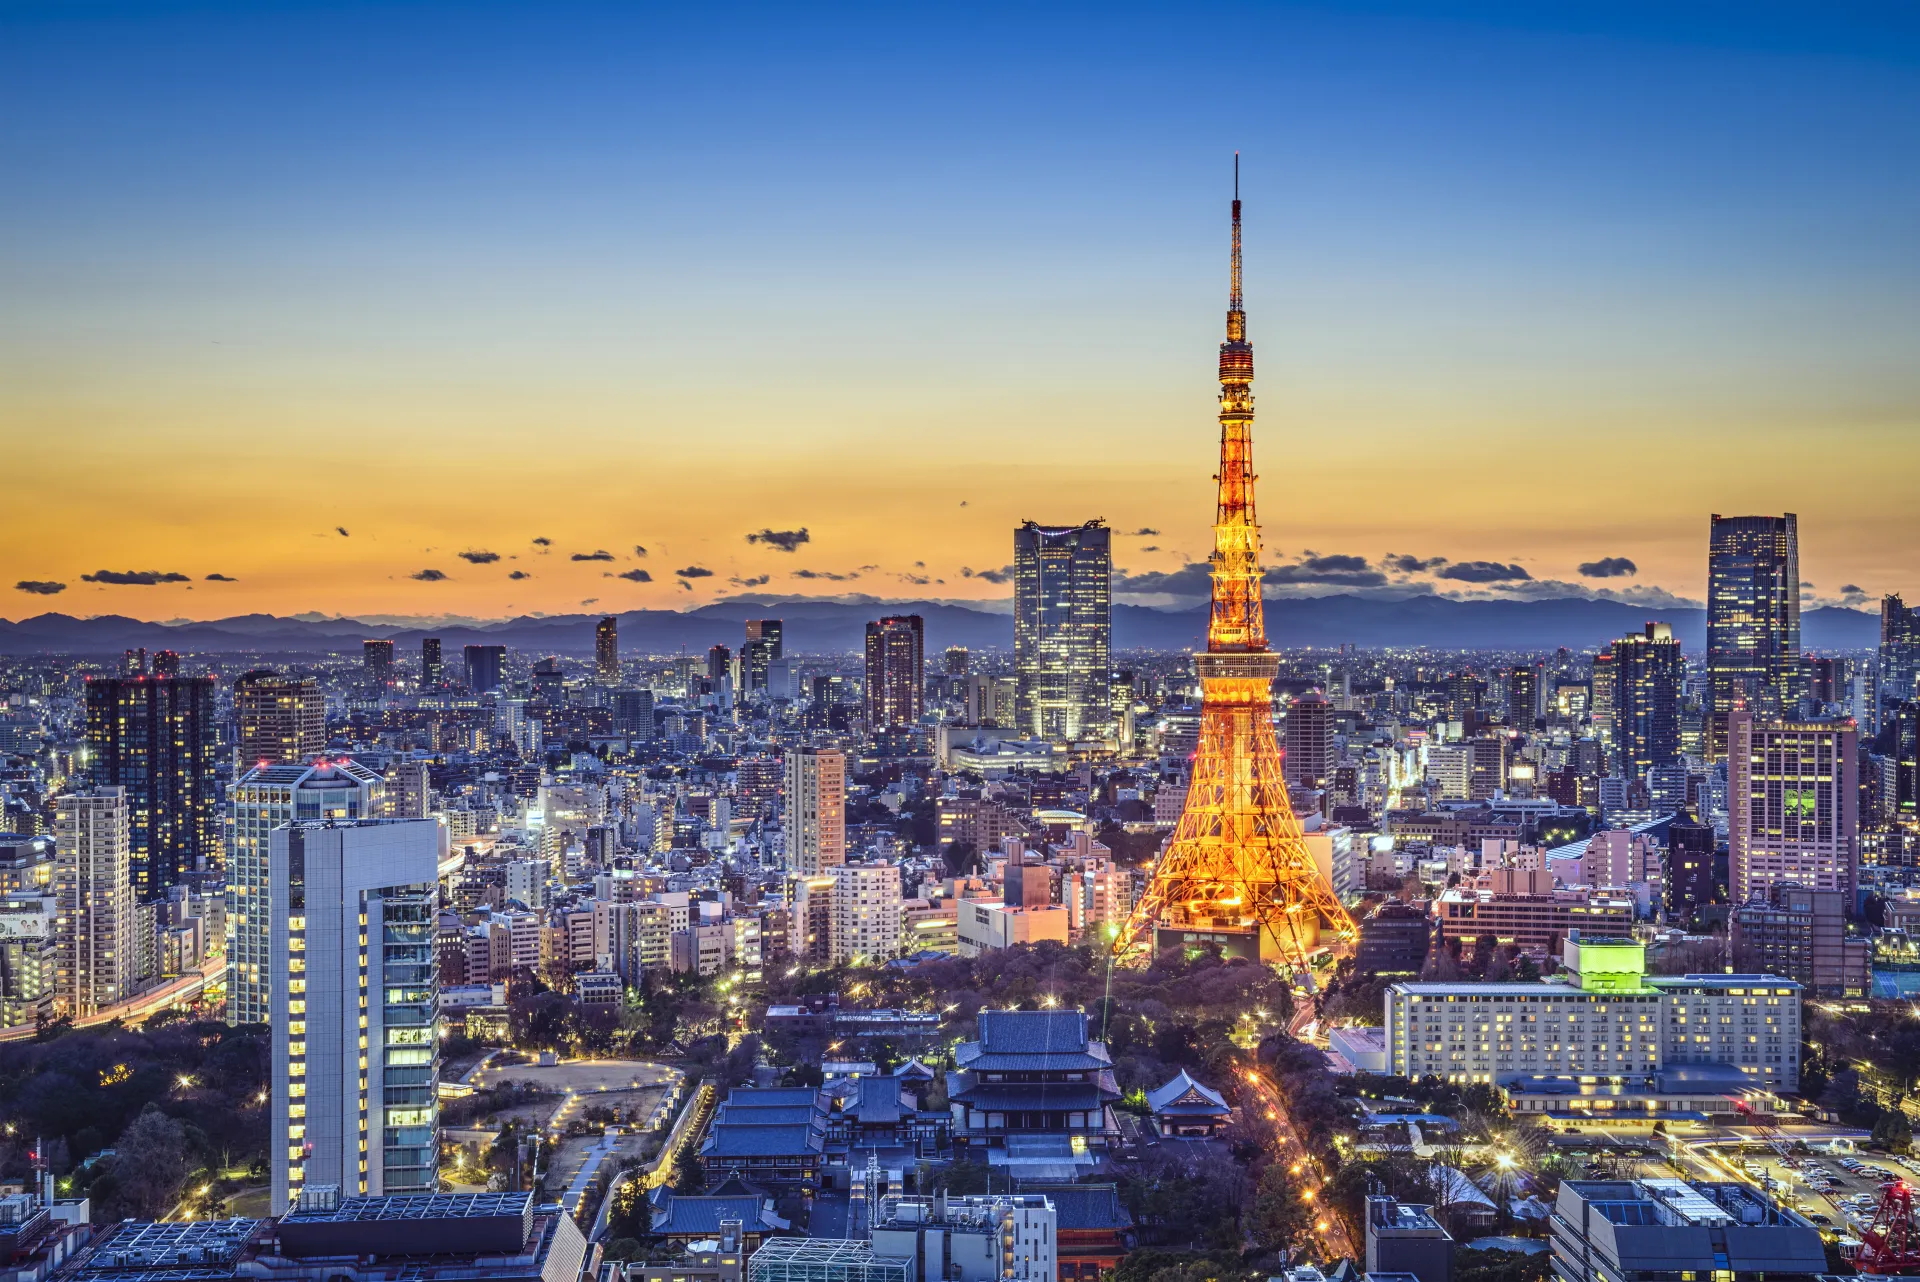 Photograph of the Tokyo skyline